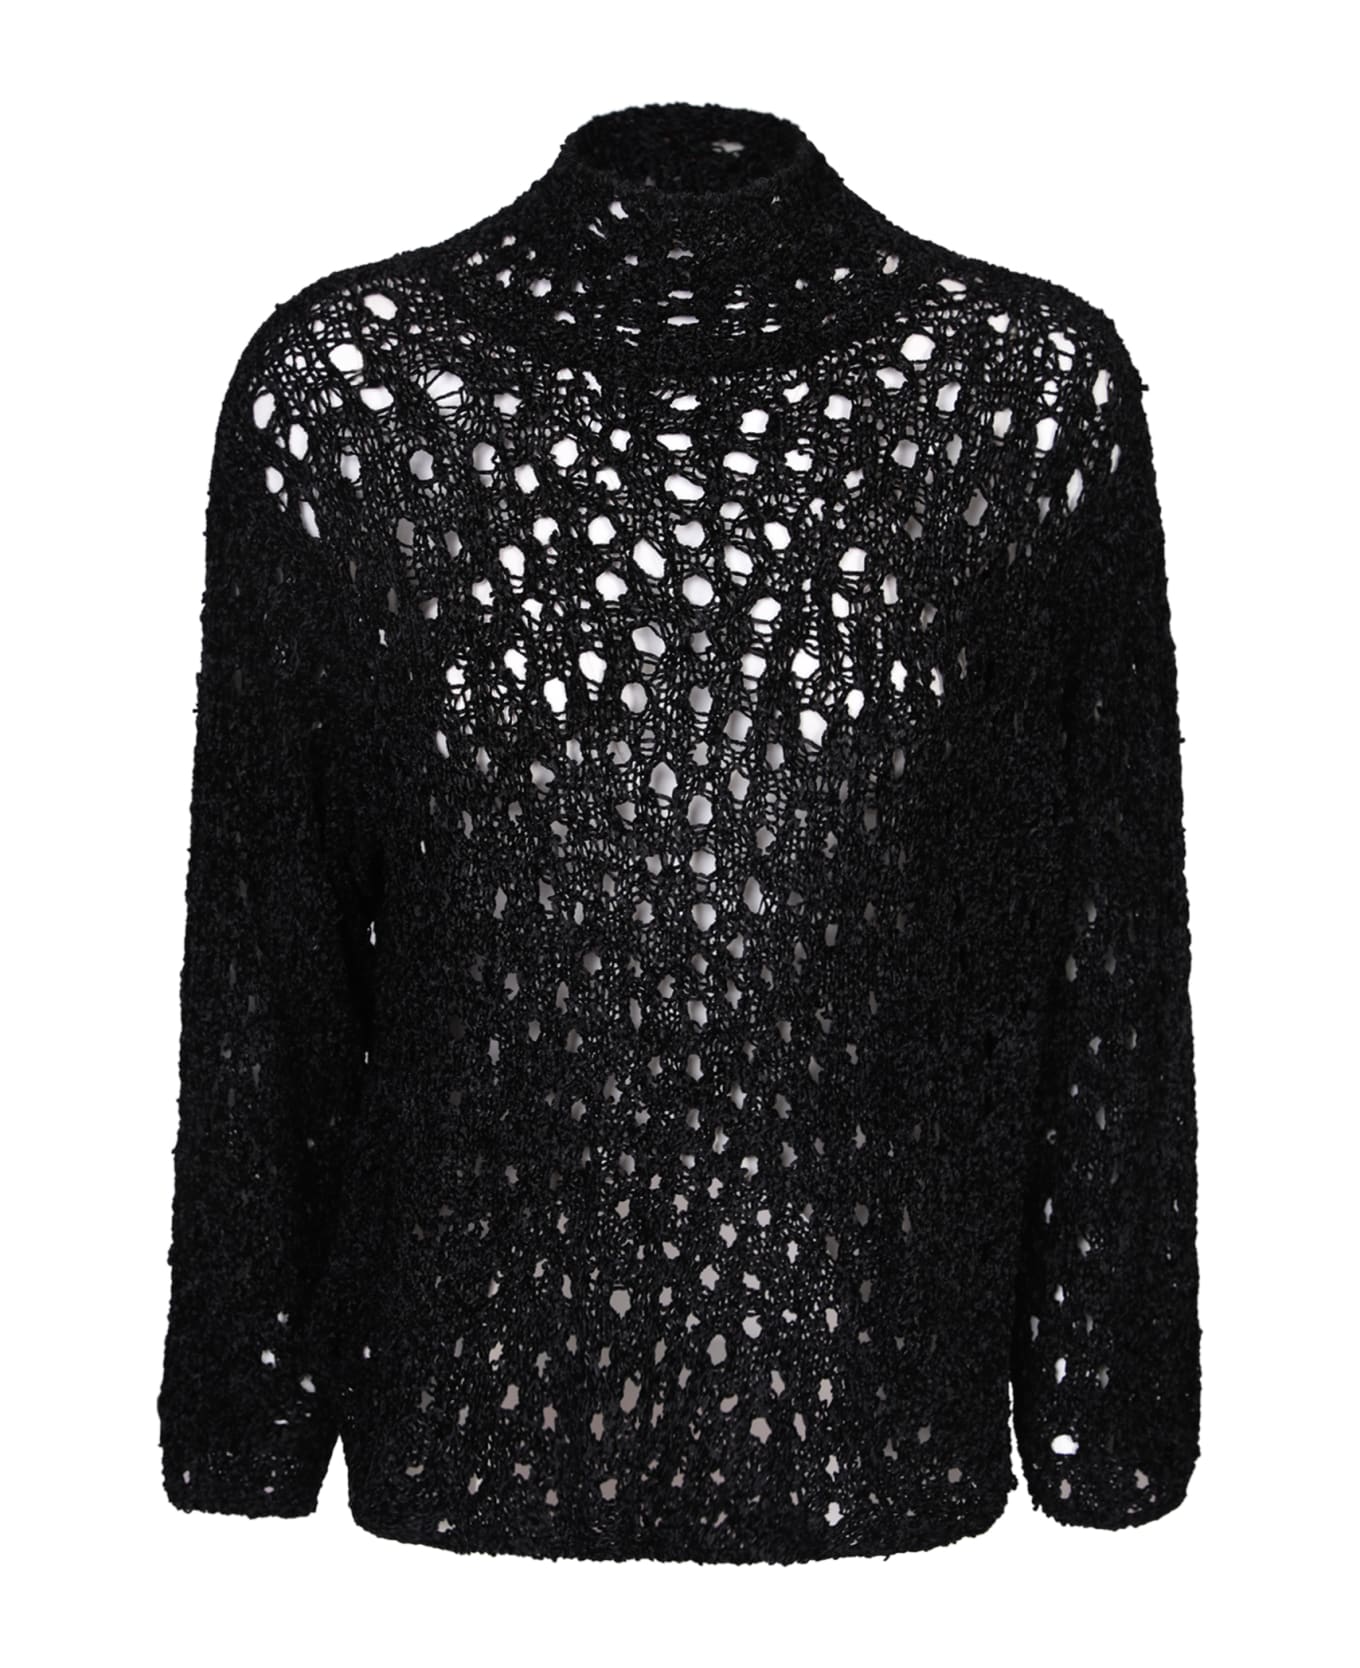 SSHEENA Perforated Knit Sweater Black - Black ニットウェア